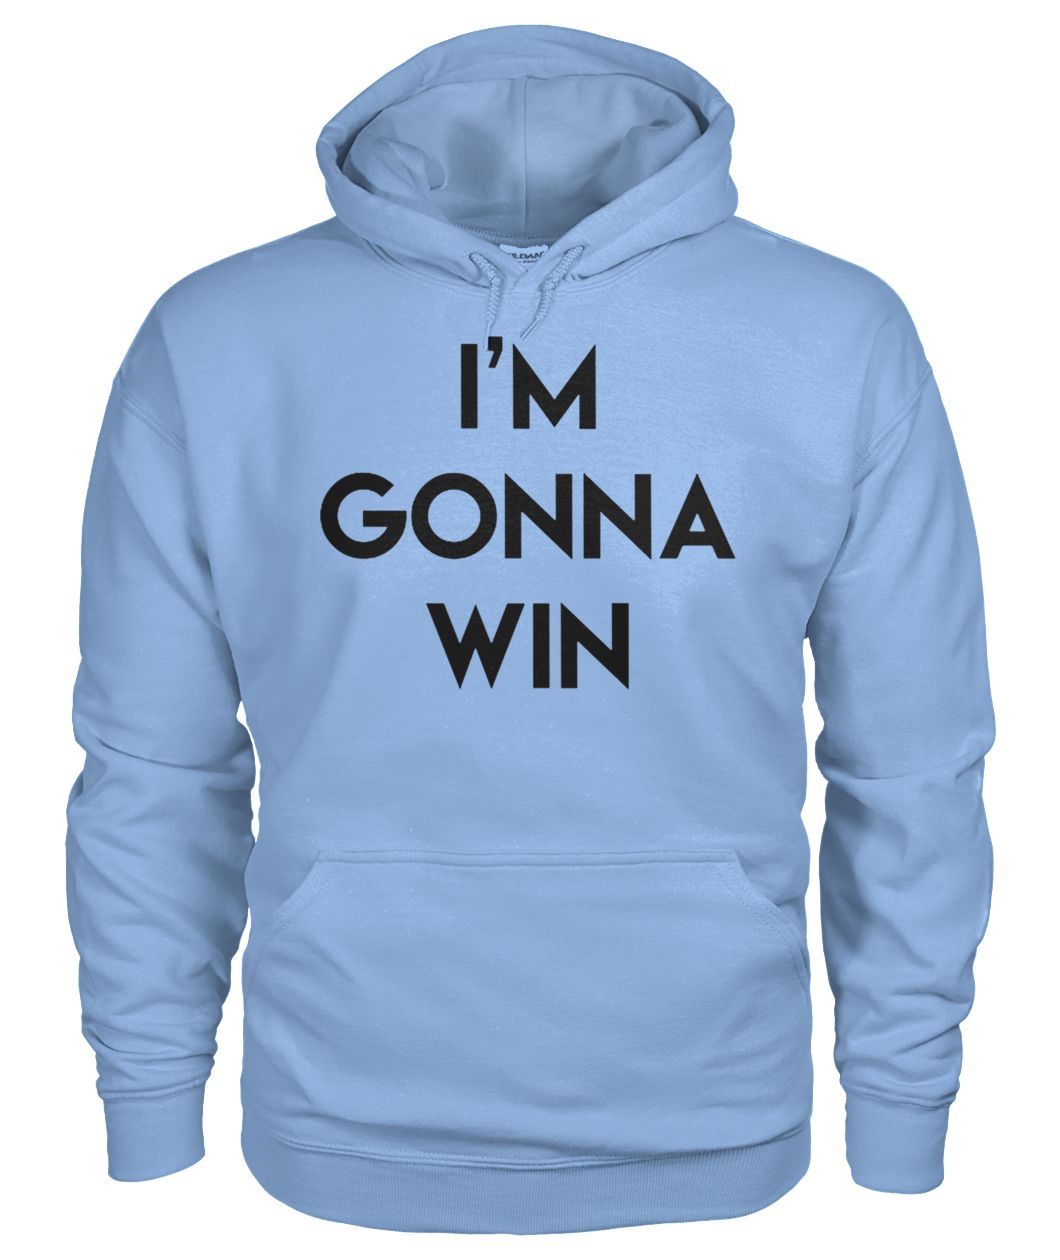 I'm gonna win gildan hoodie